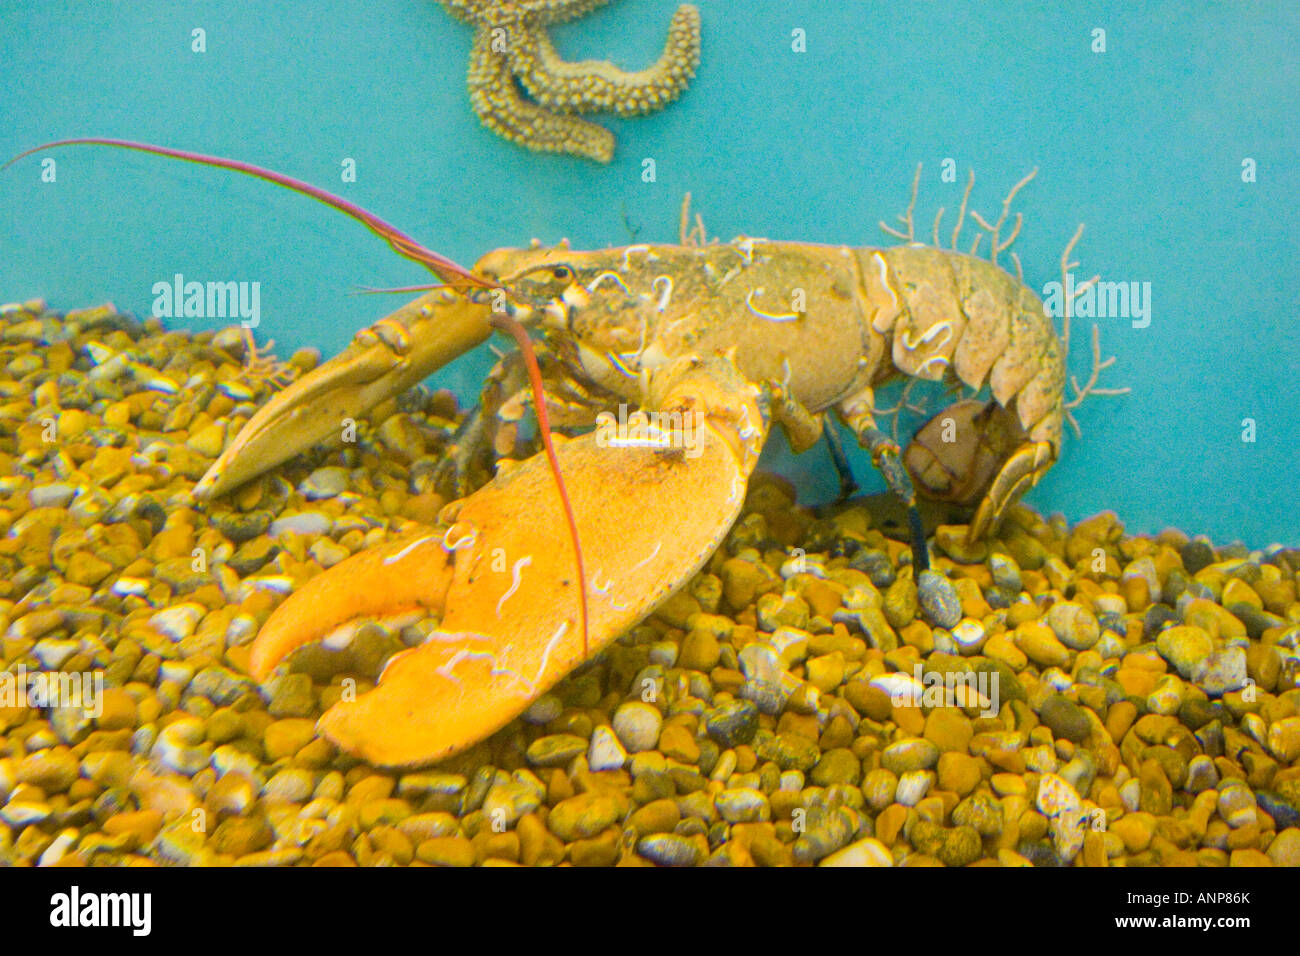 Lobster in a salt water aquarium Stock Photo